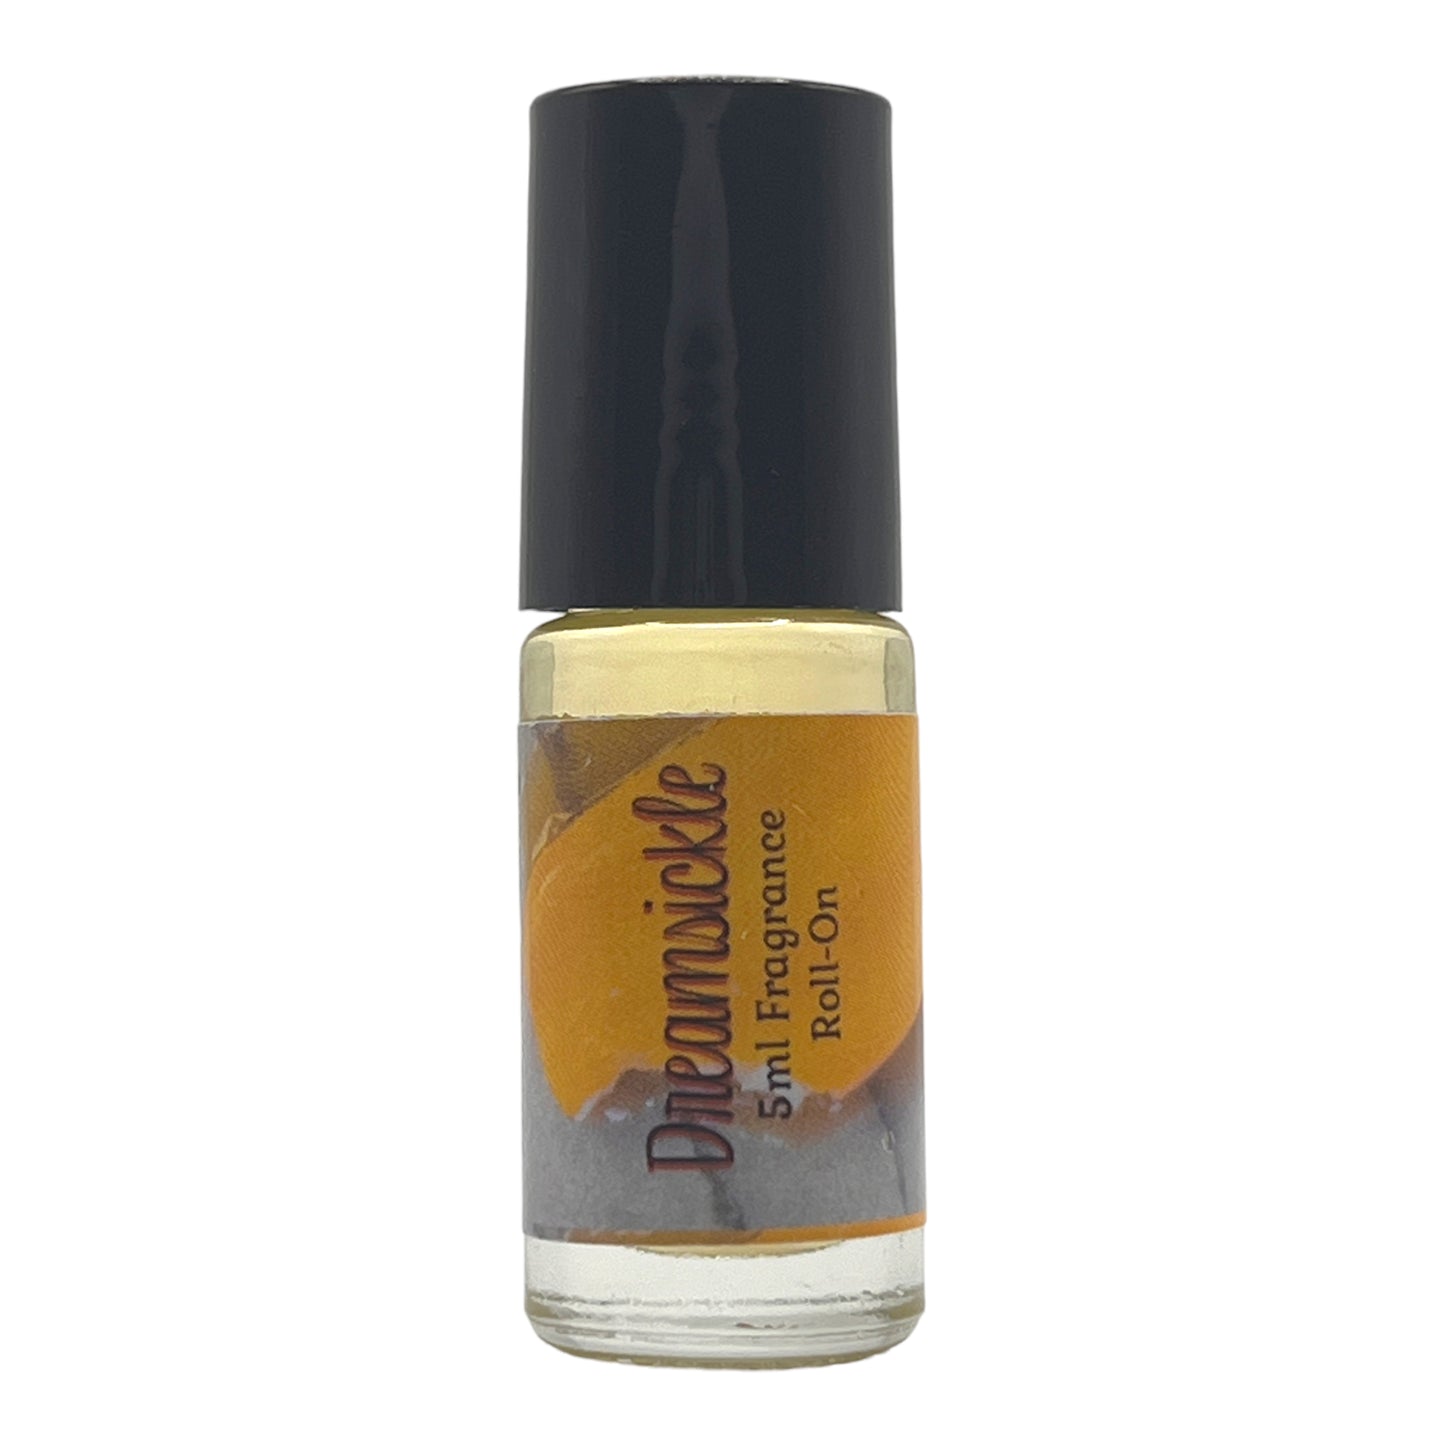 Dreamsickle Perfume Oil Fragrance Roll On